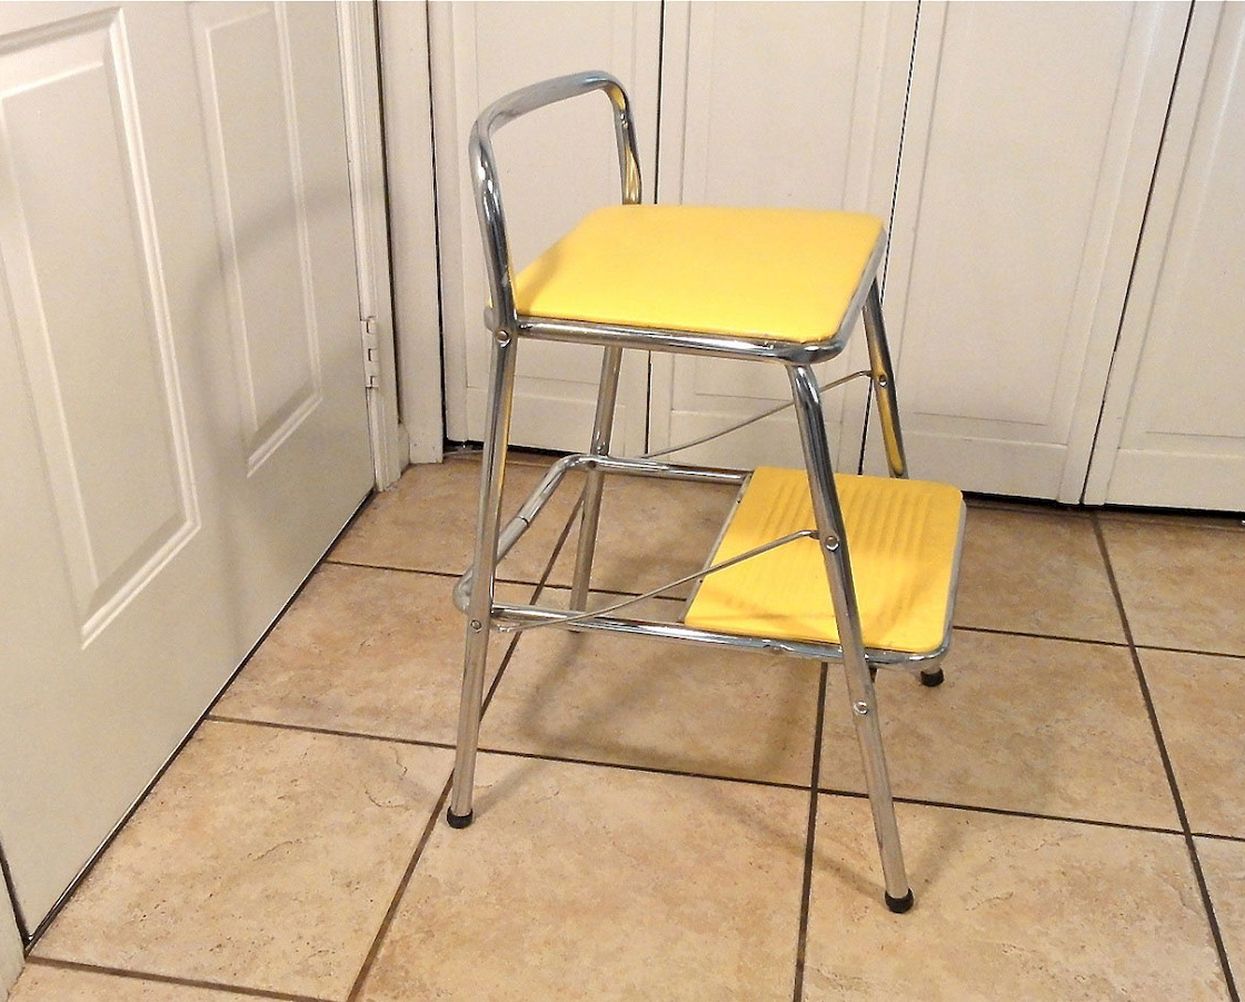 Kitchen Step Stool Chair photo - 5